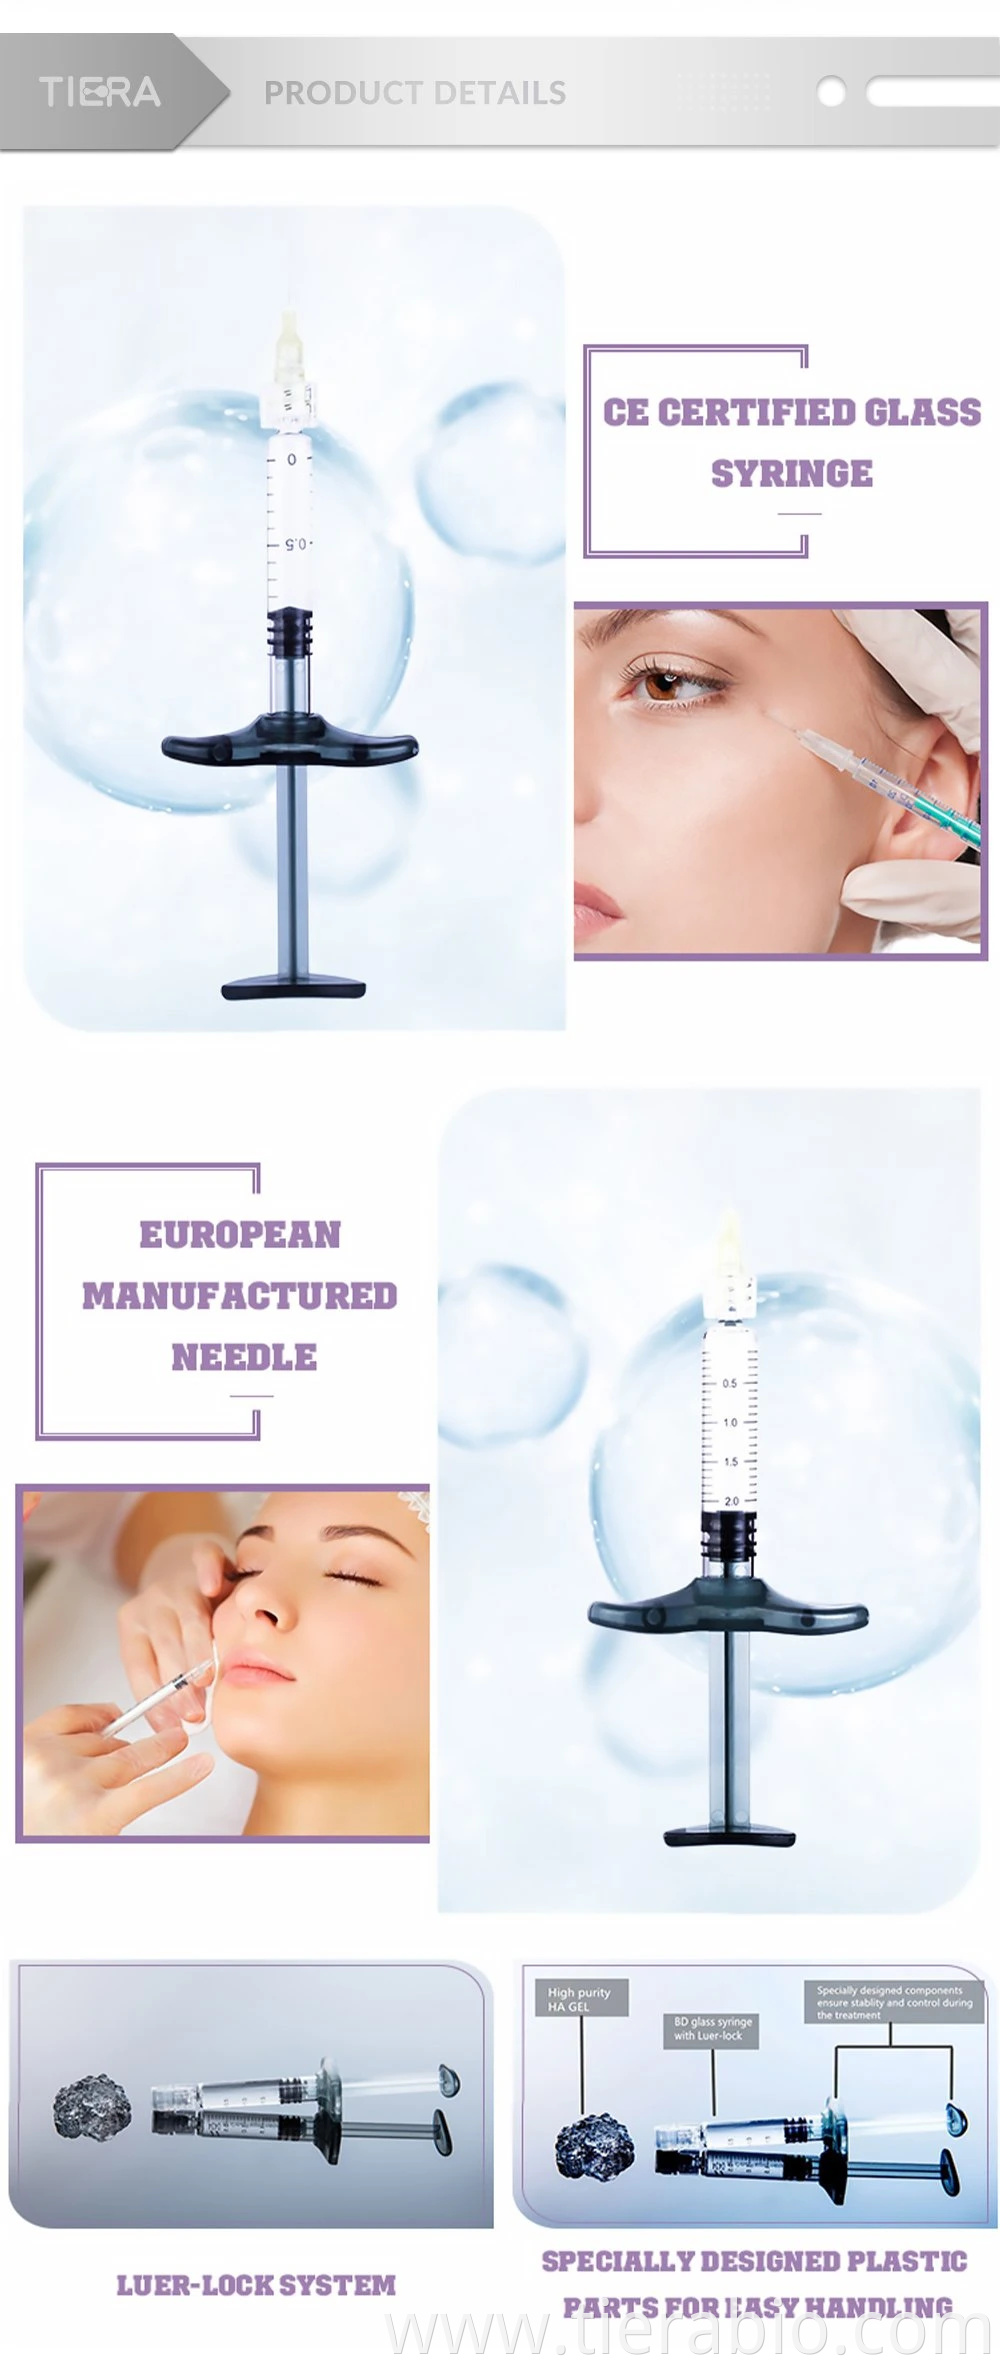 Dermeca Hyaluronic Acid Lip Filler Injection to Buy for Facial Beauty 1ml